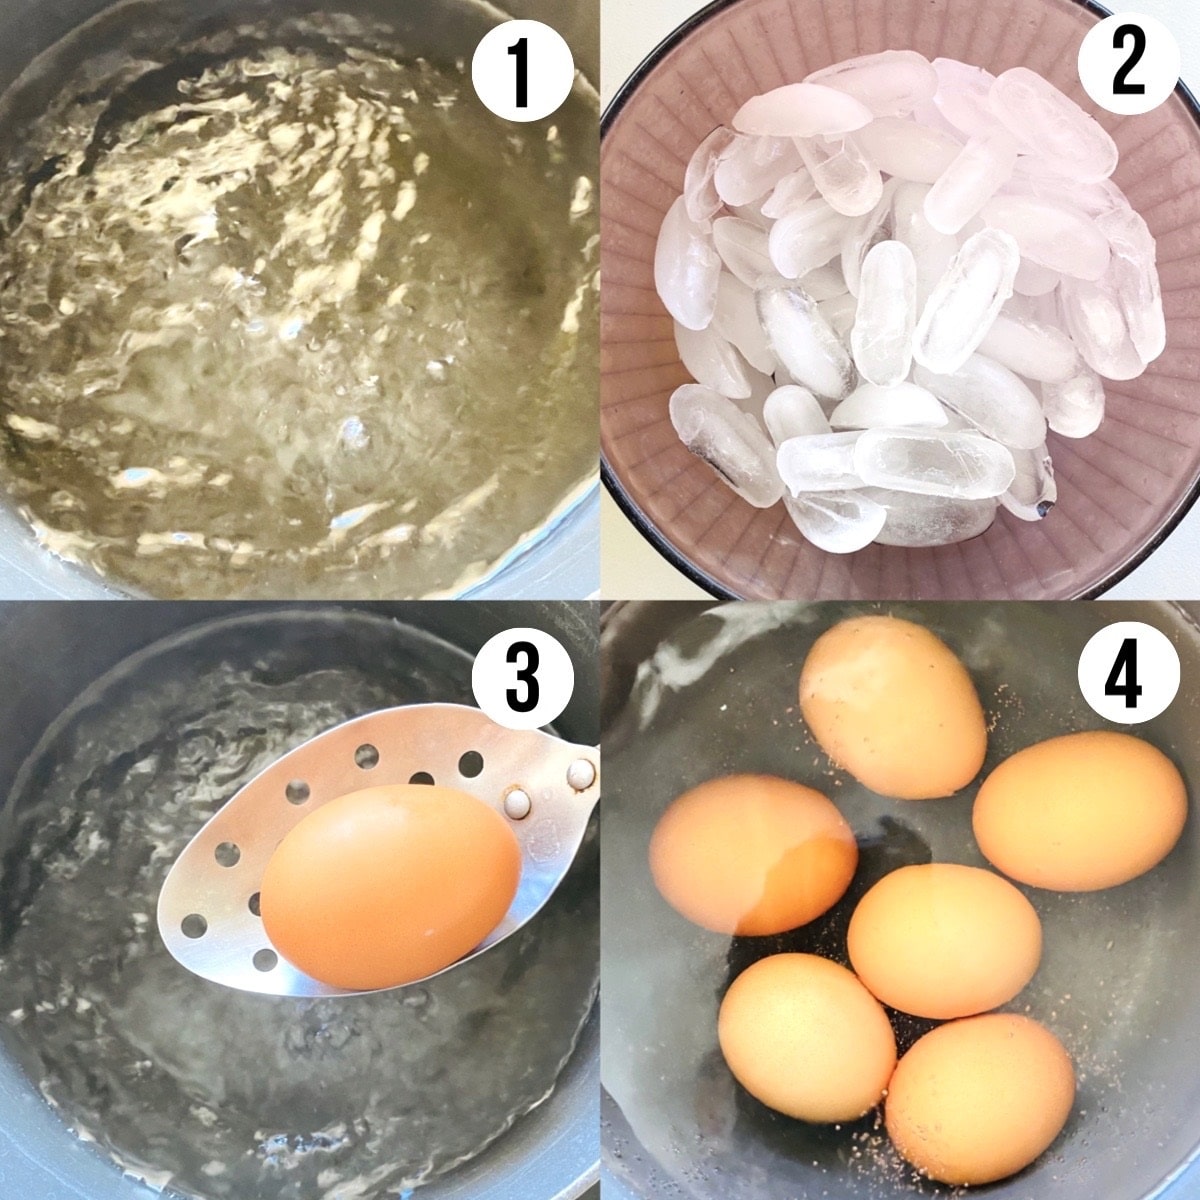 mayak eggs process shots 1-4